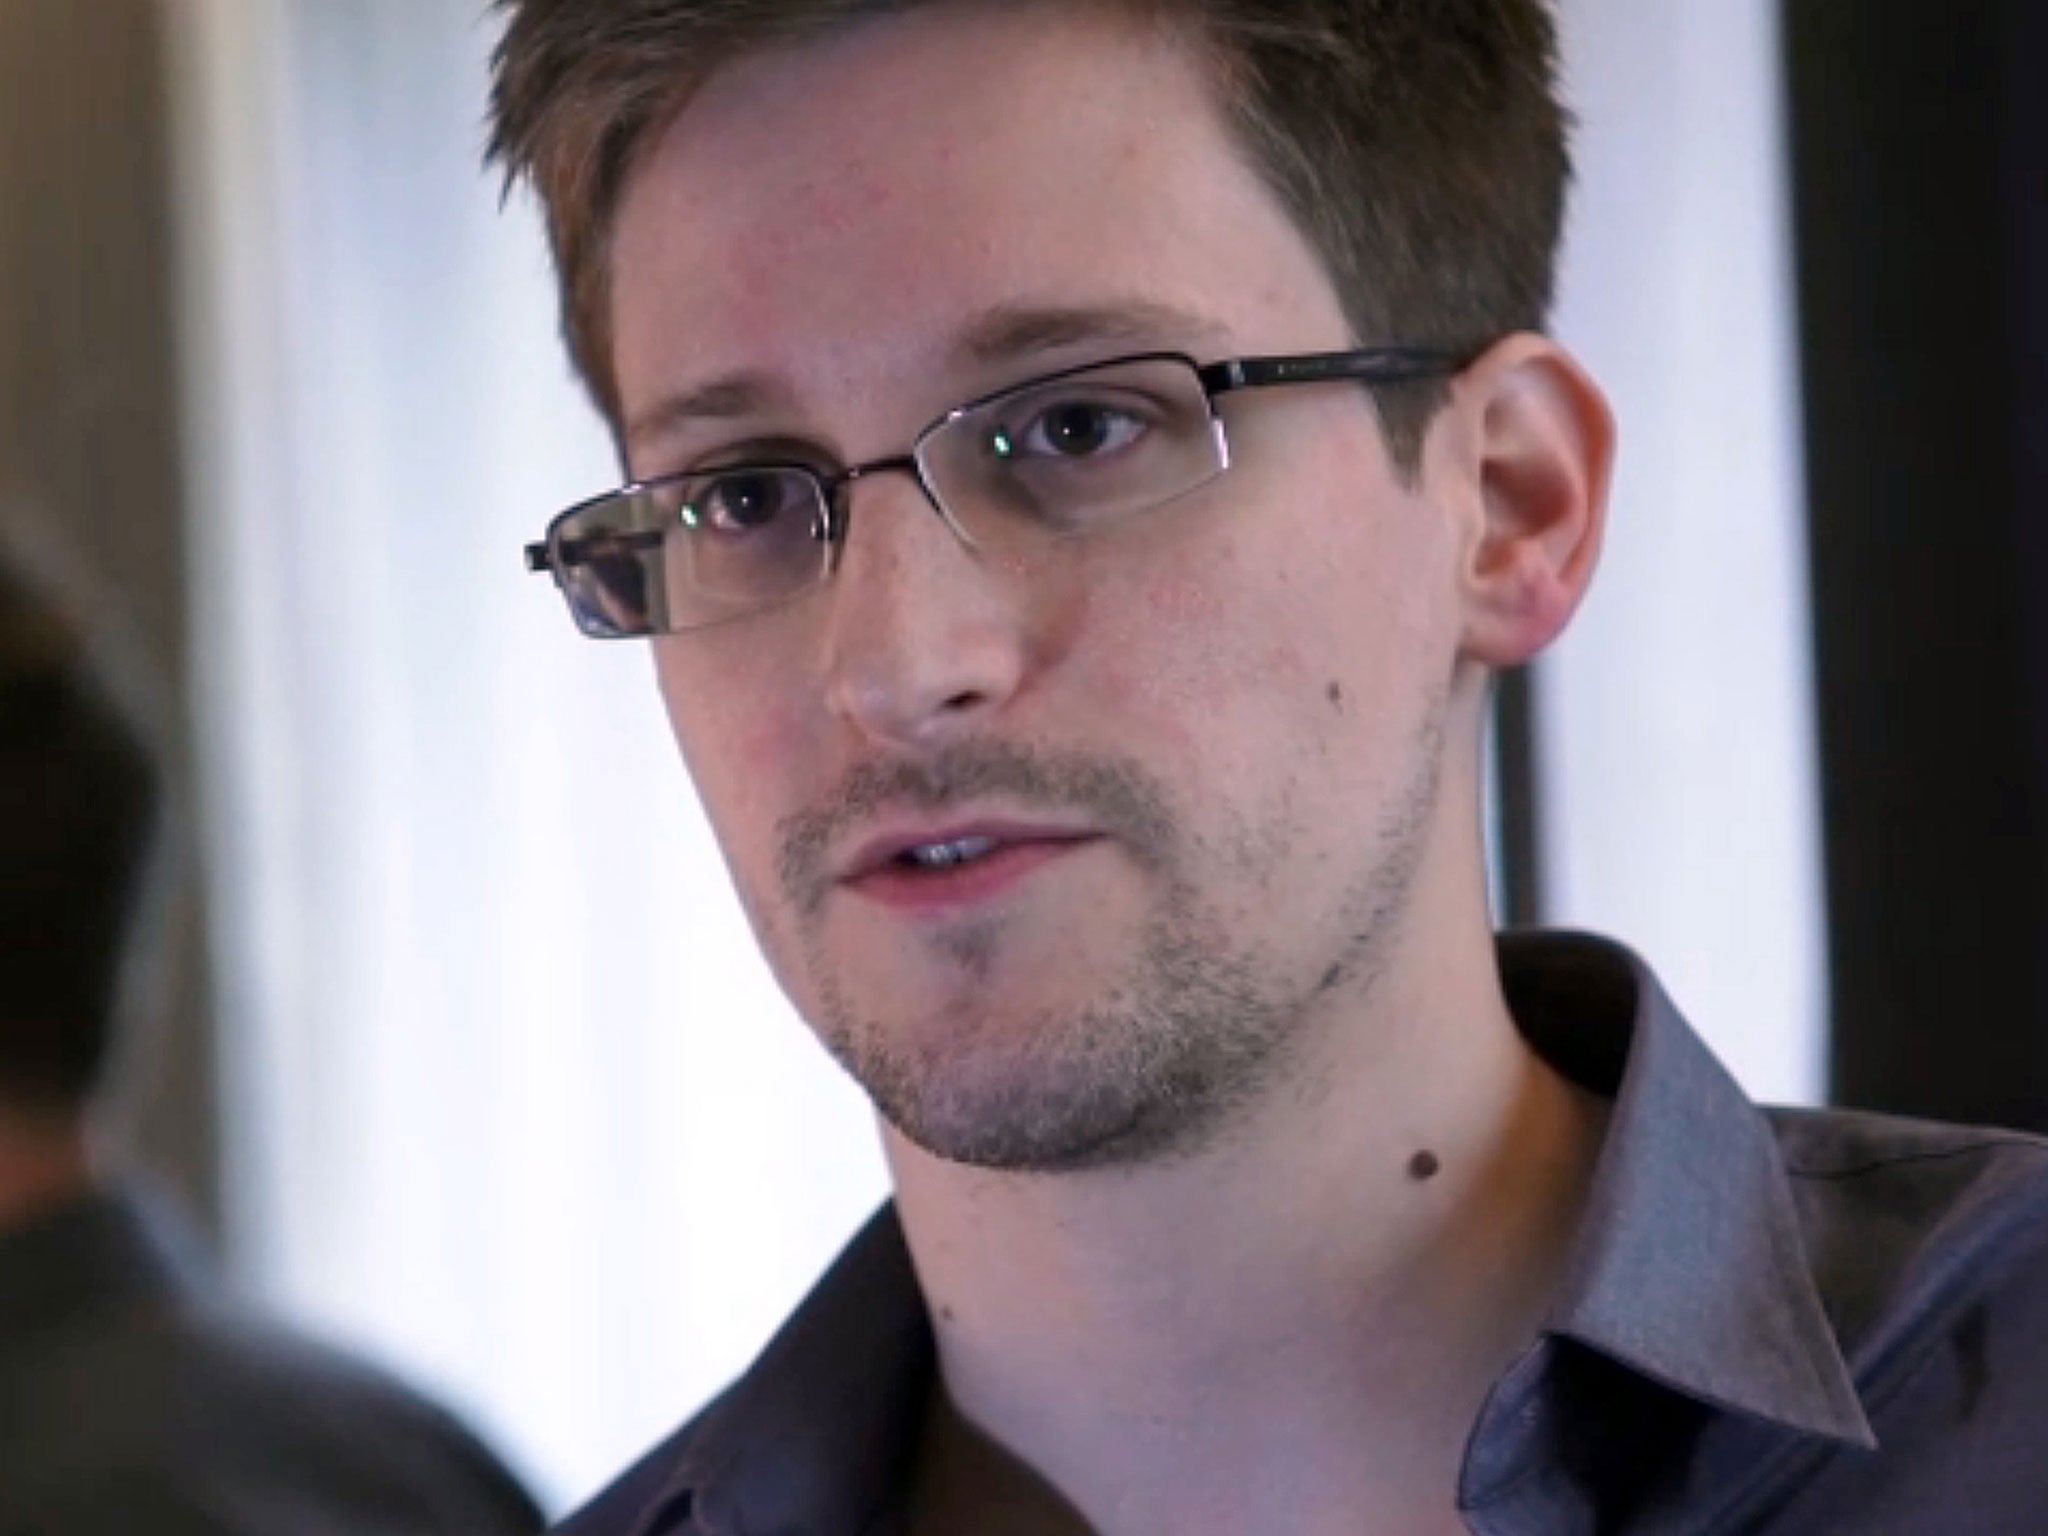 Edward Snowden’s leaks upset the balance on data sharing